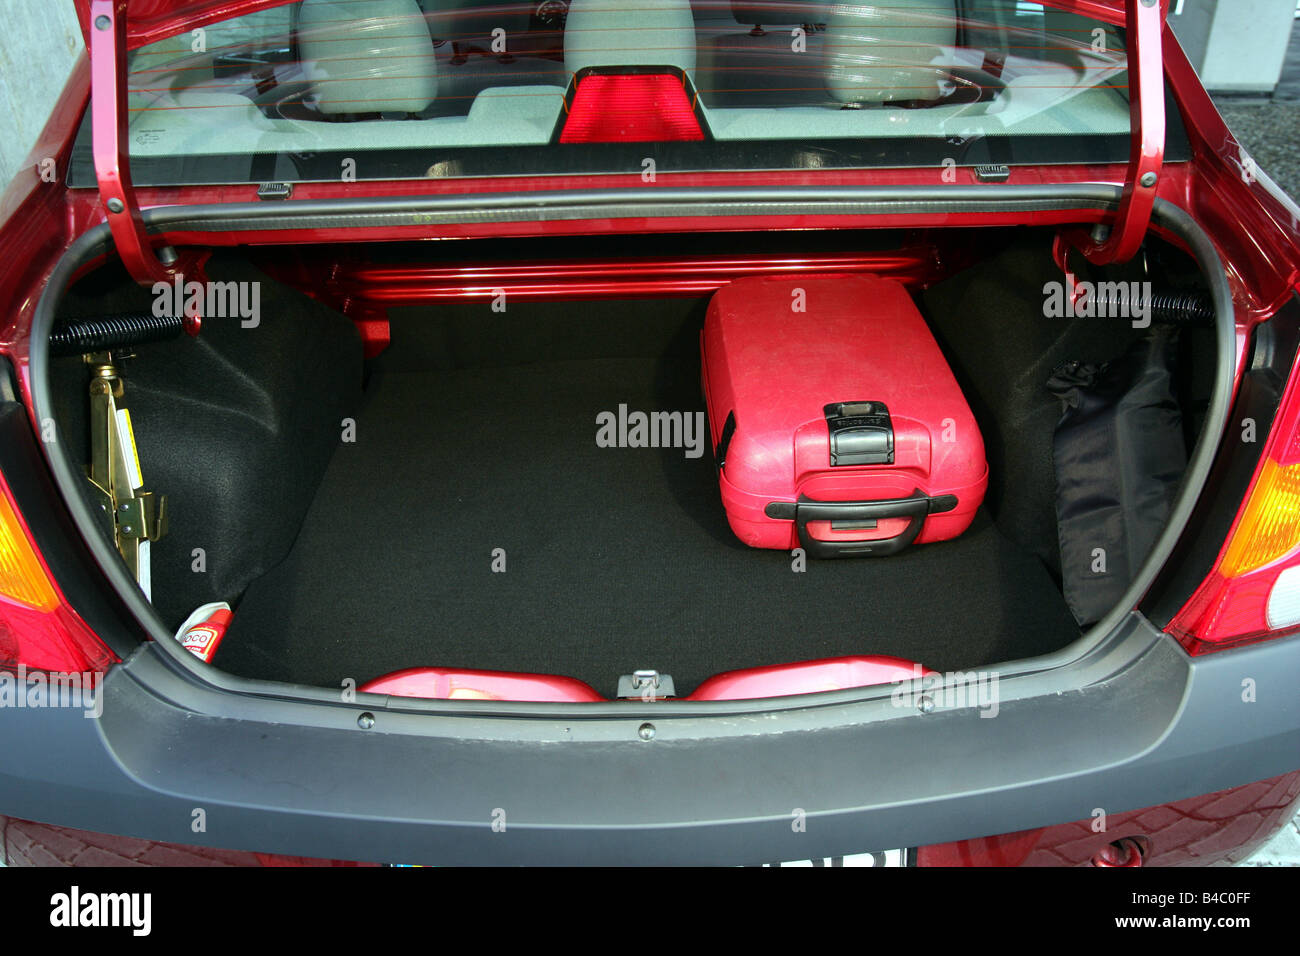 Car dacia hi-res stock photography and images - Alamy